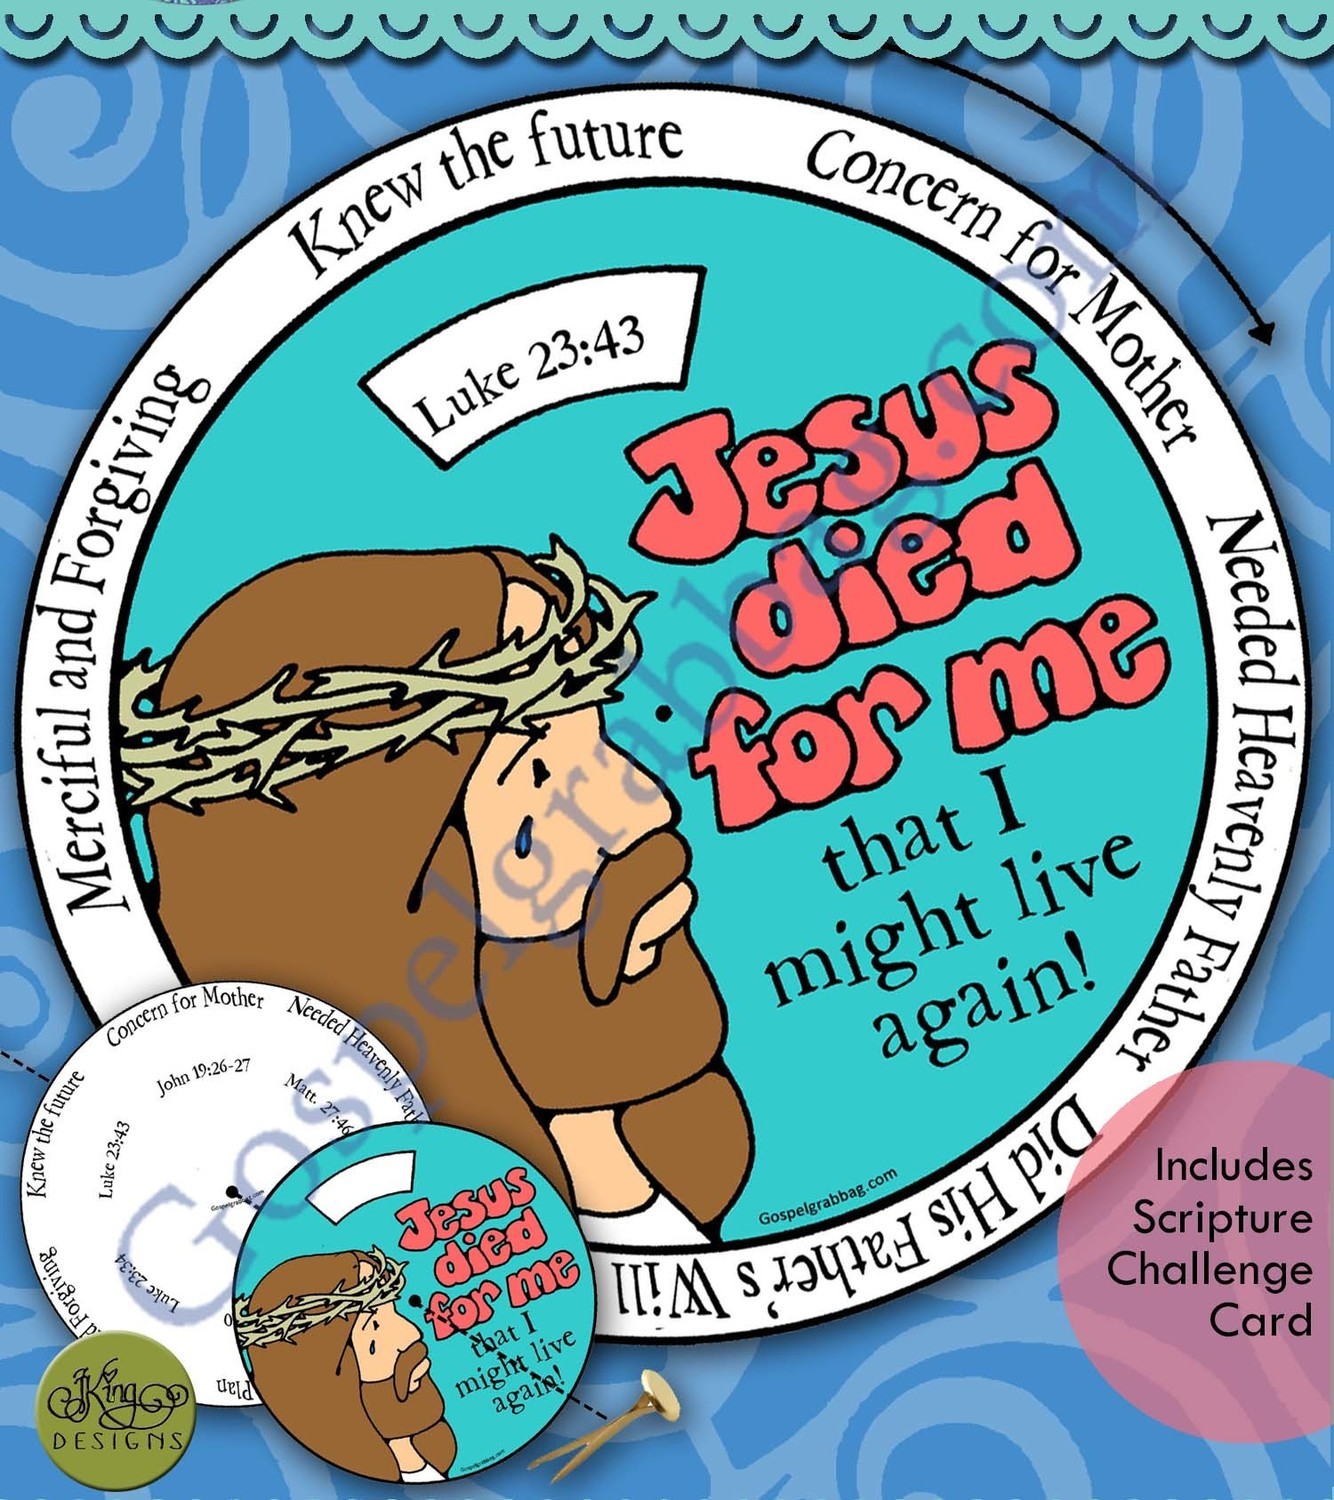 Jesus Died for Me - Atonement ponder wheel